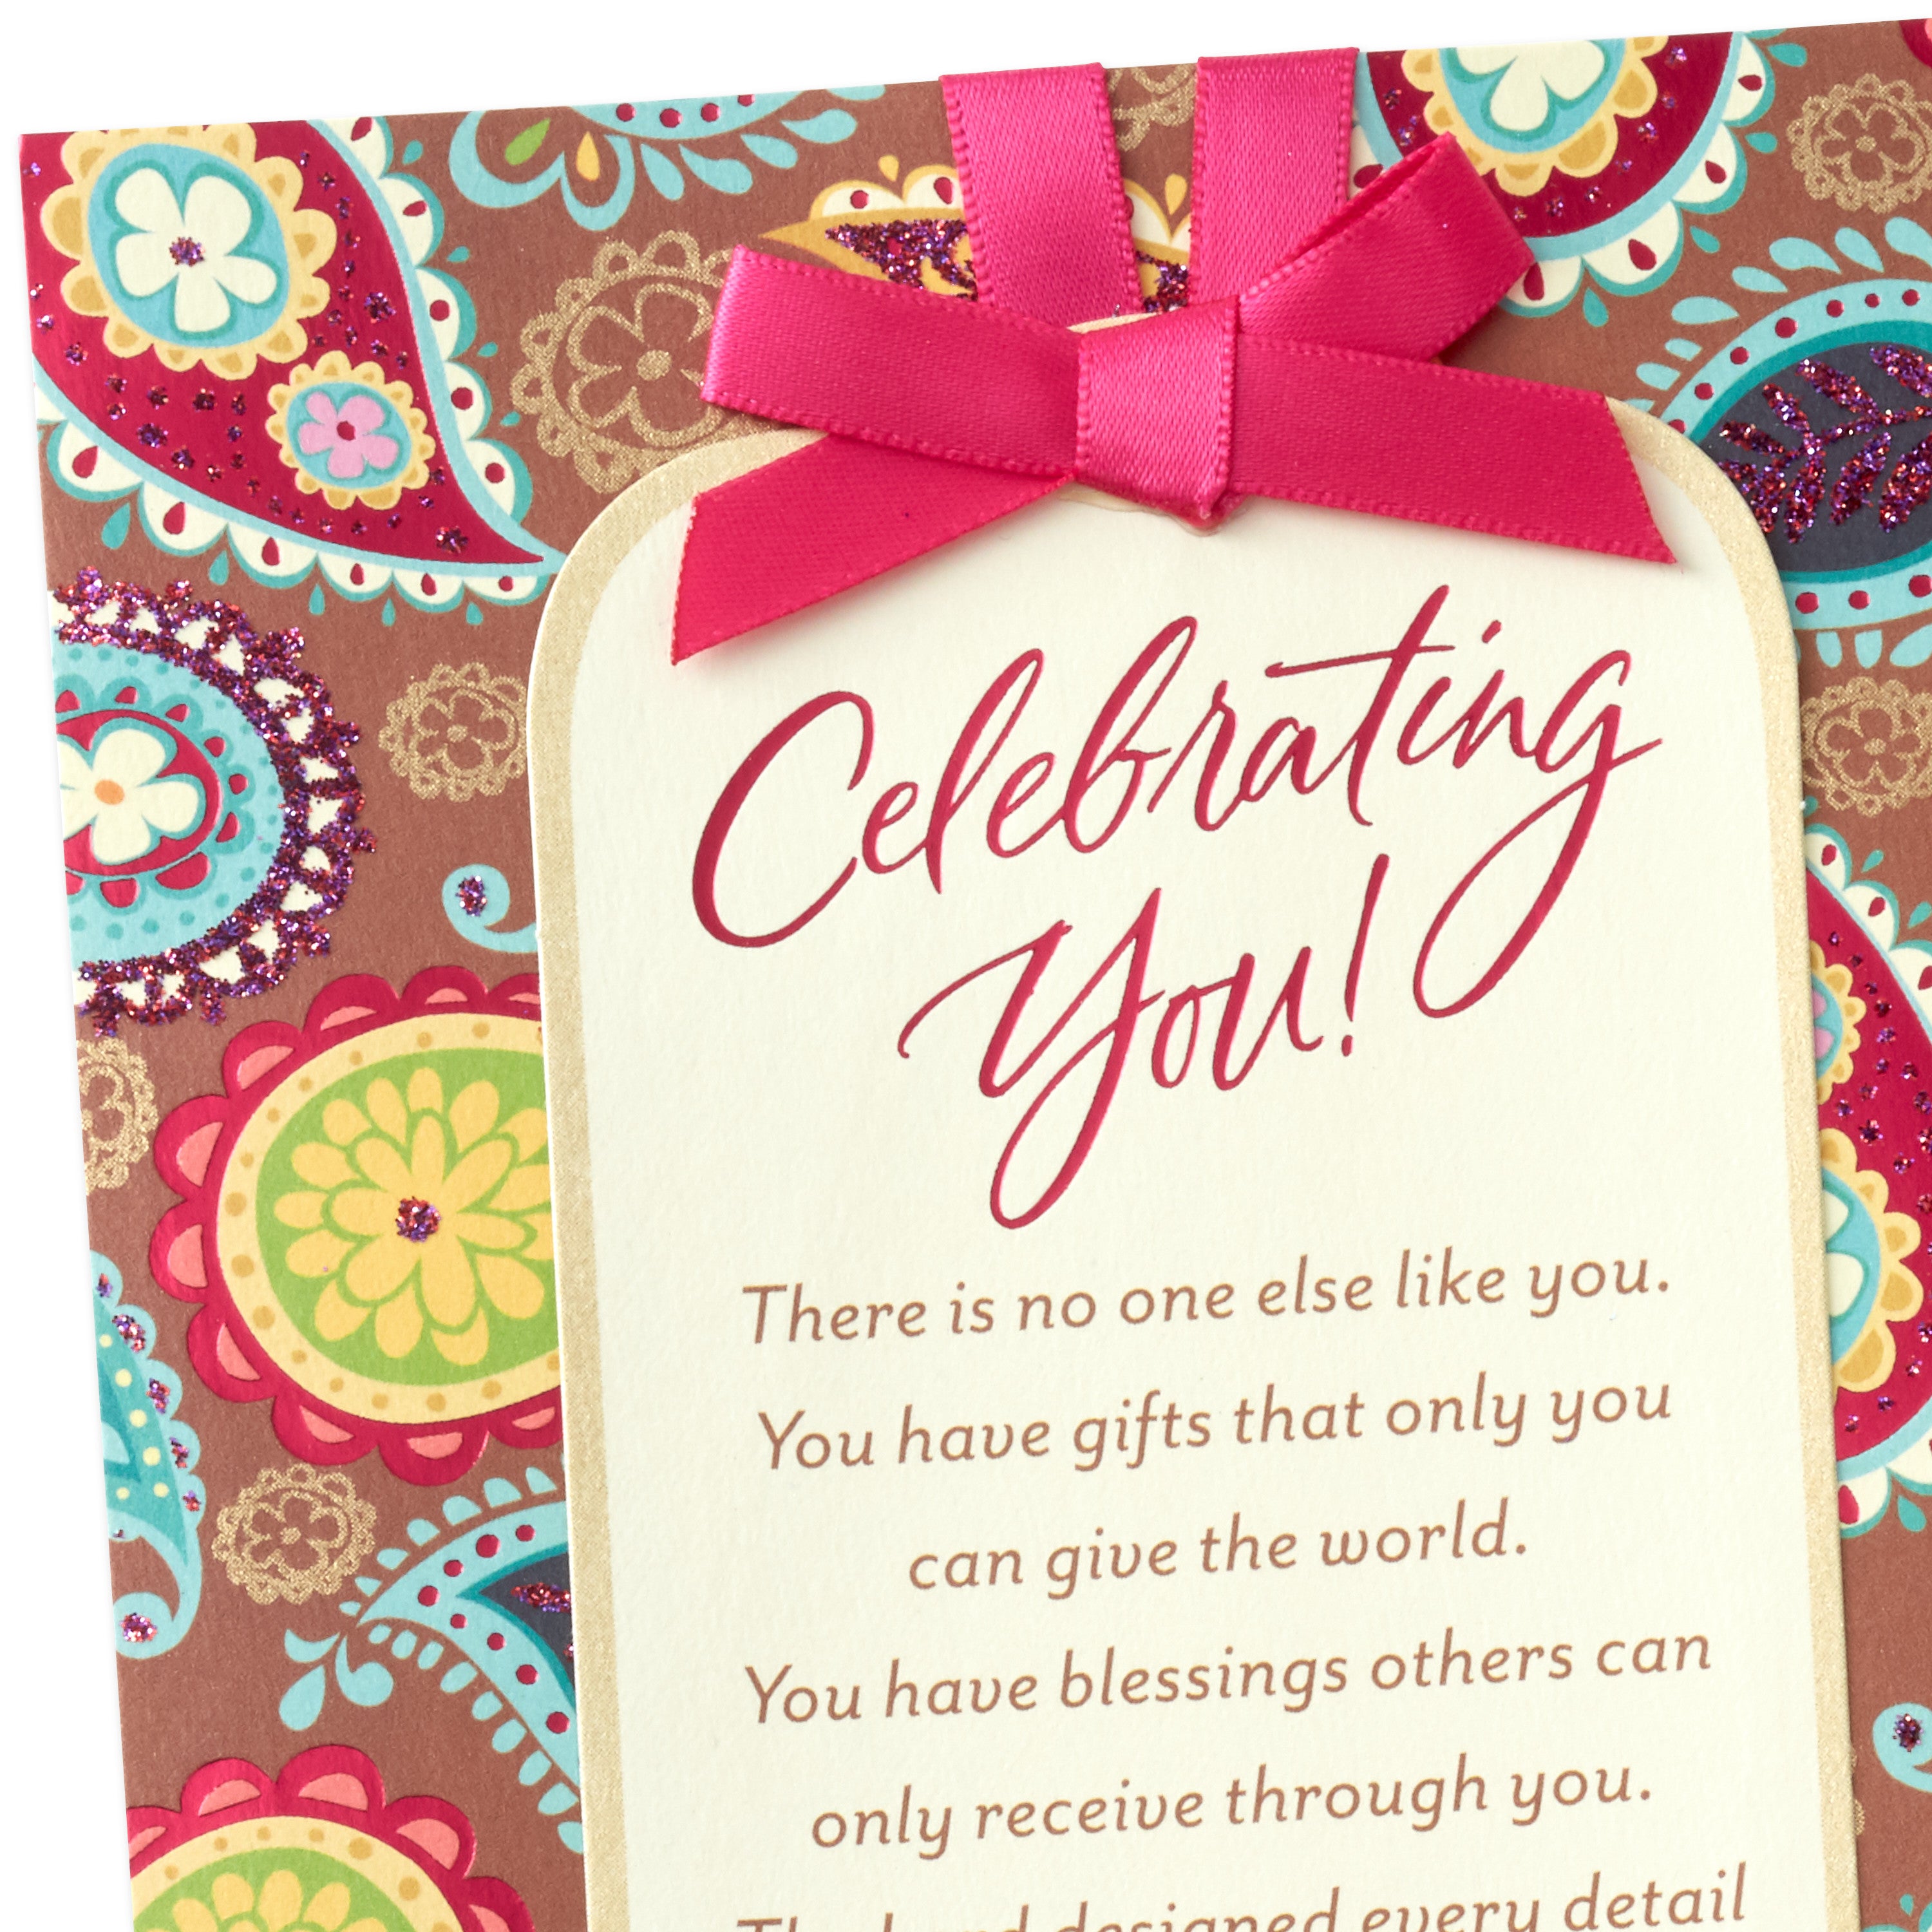 Mahogany Religious Birthday Card for Her (Celebrating You)